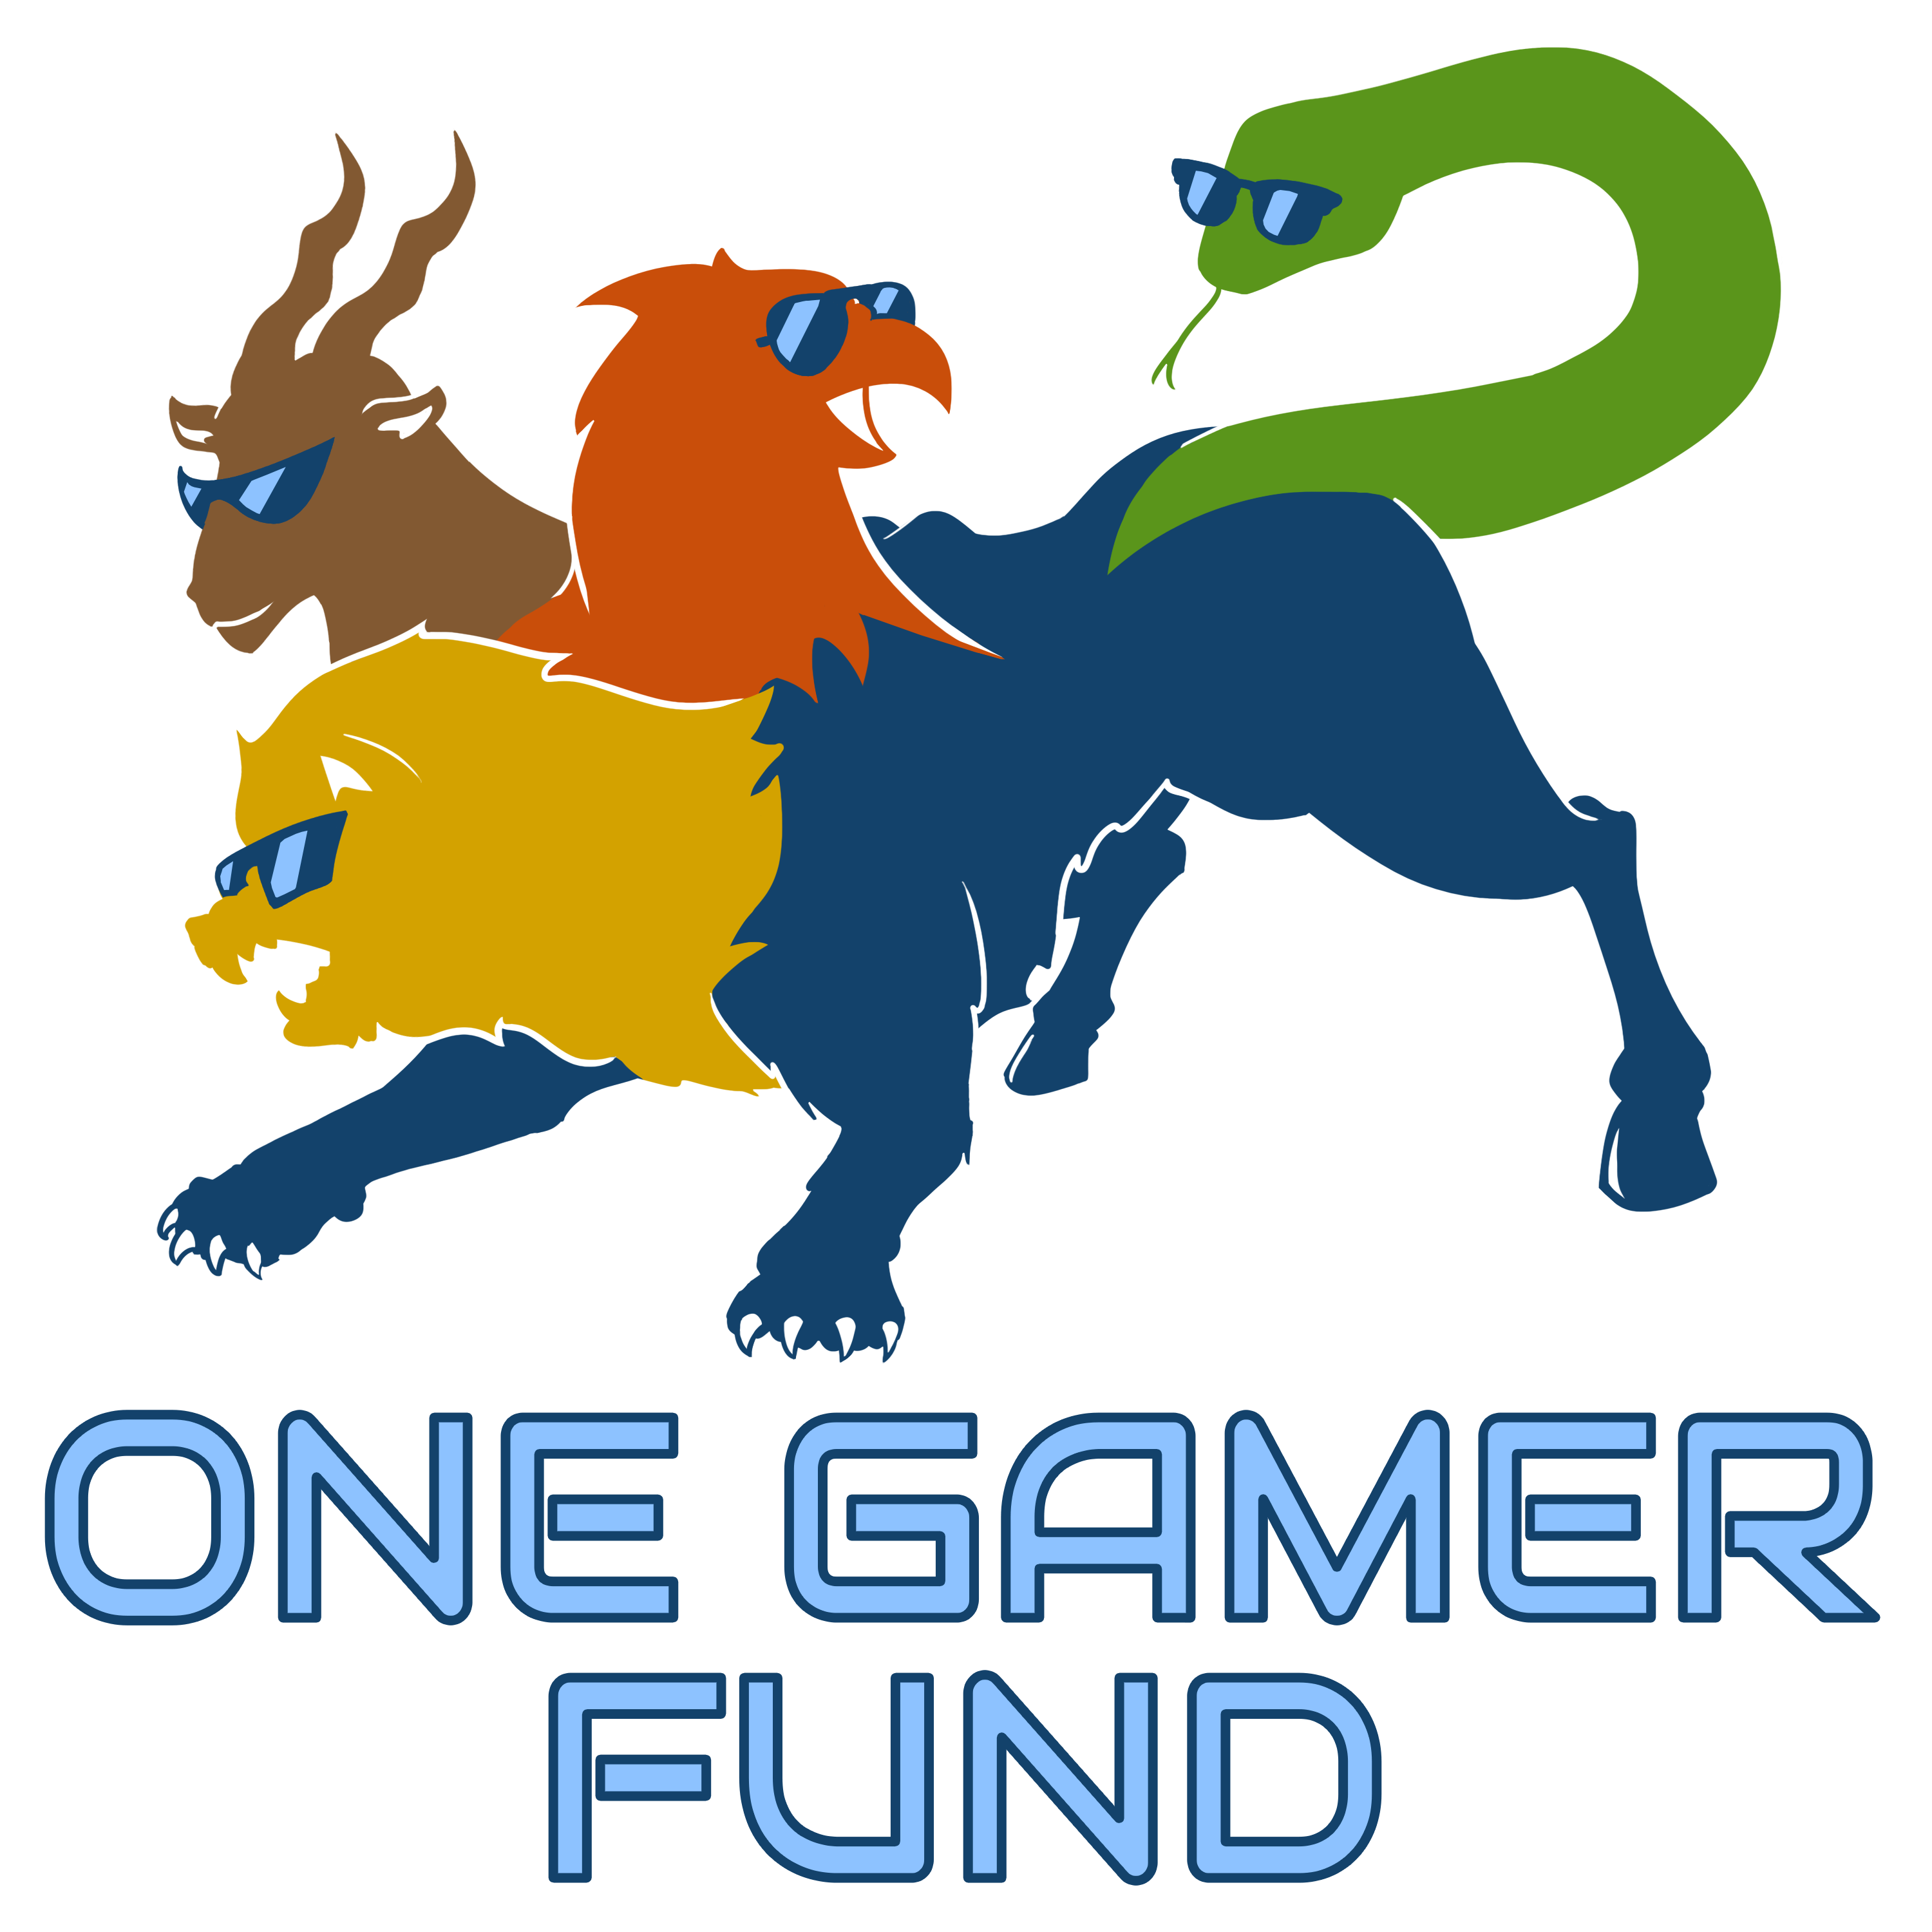 One Gamer Fund logo